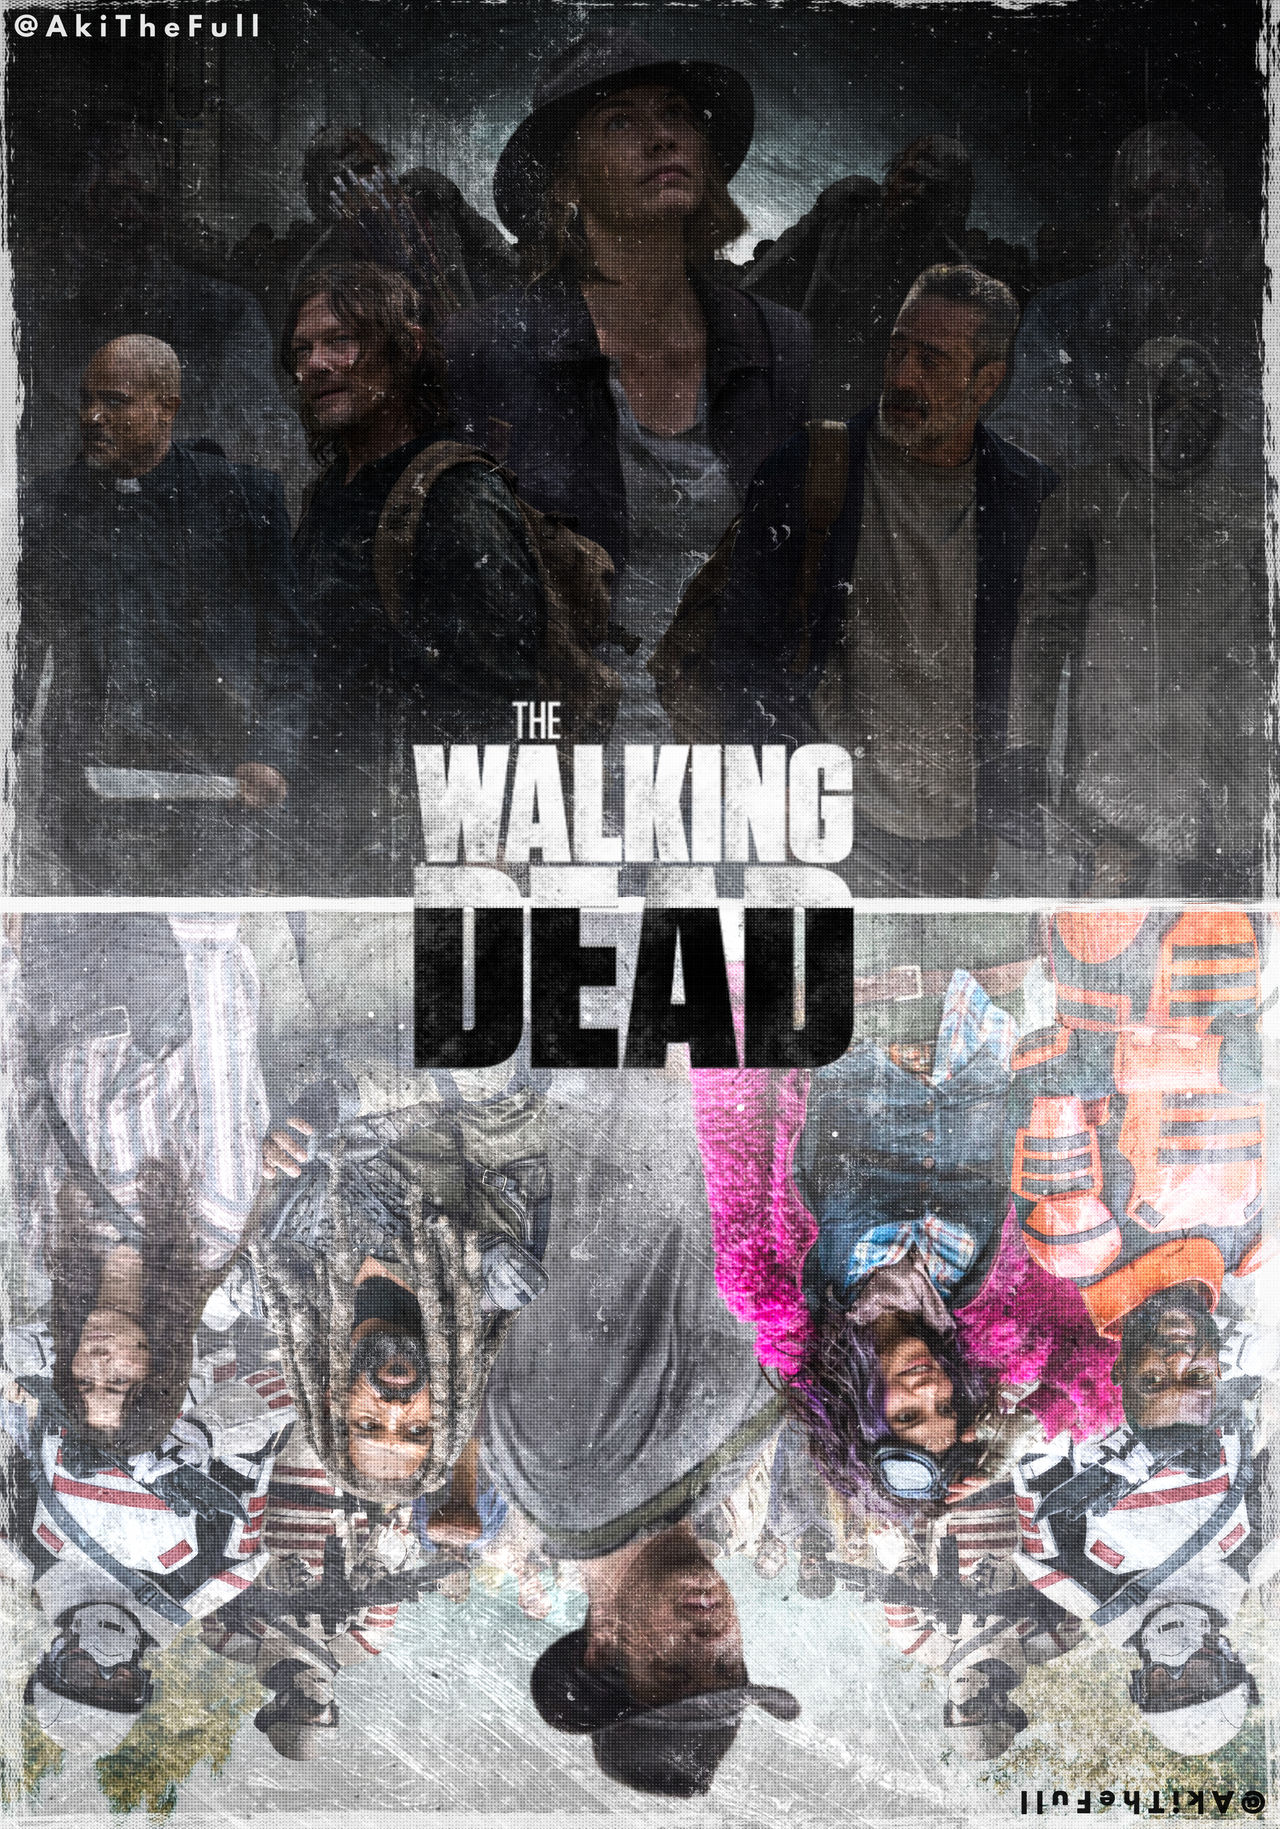 The Walking Dead Season 11 Premiere Poster by AkiTheFull on DeviantArt